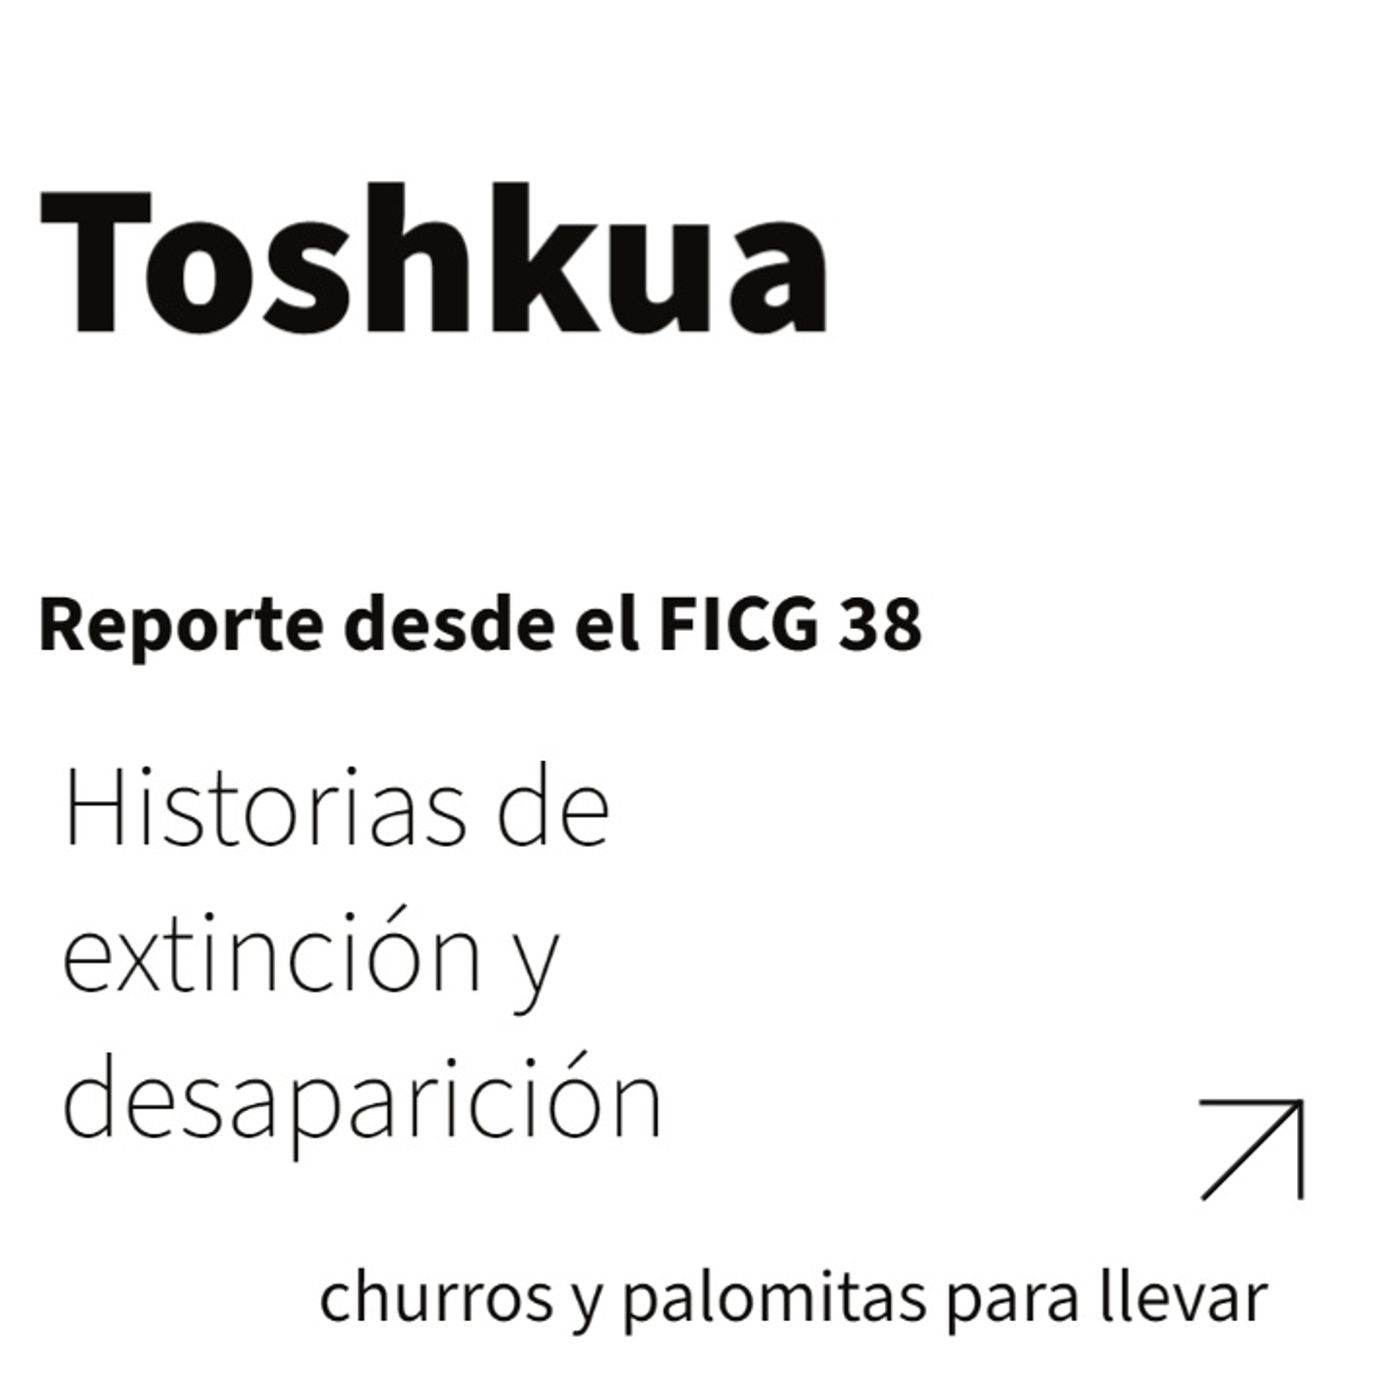 FICG 38.09 - Toshkua